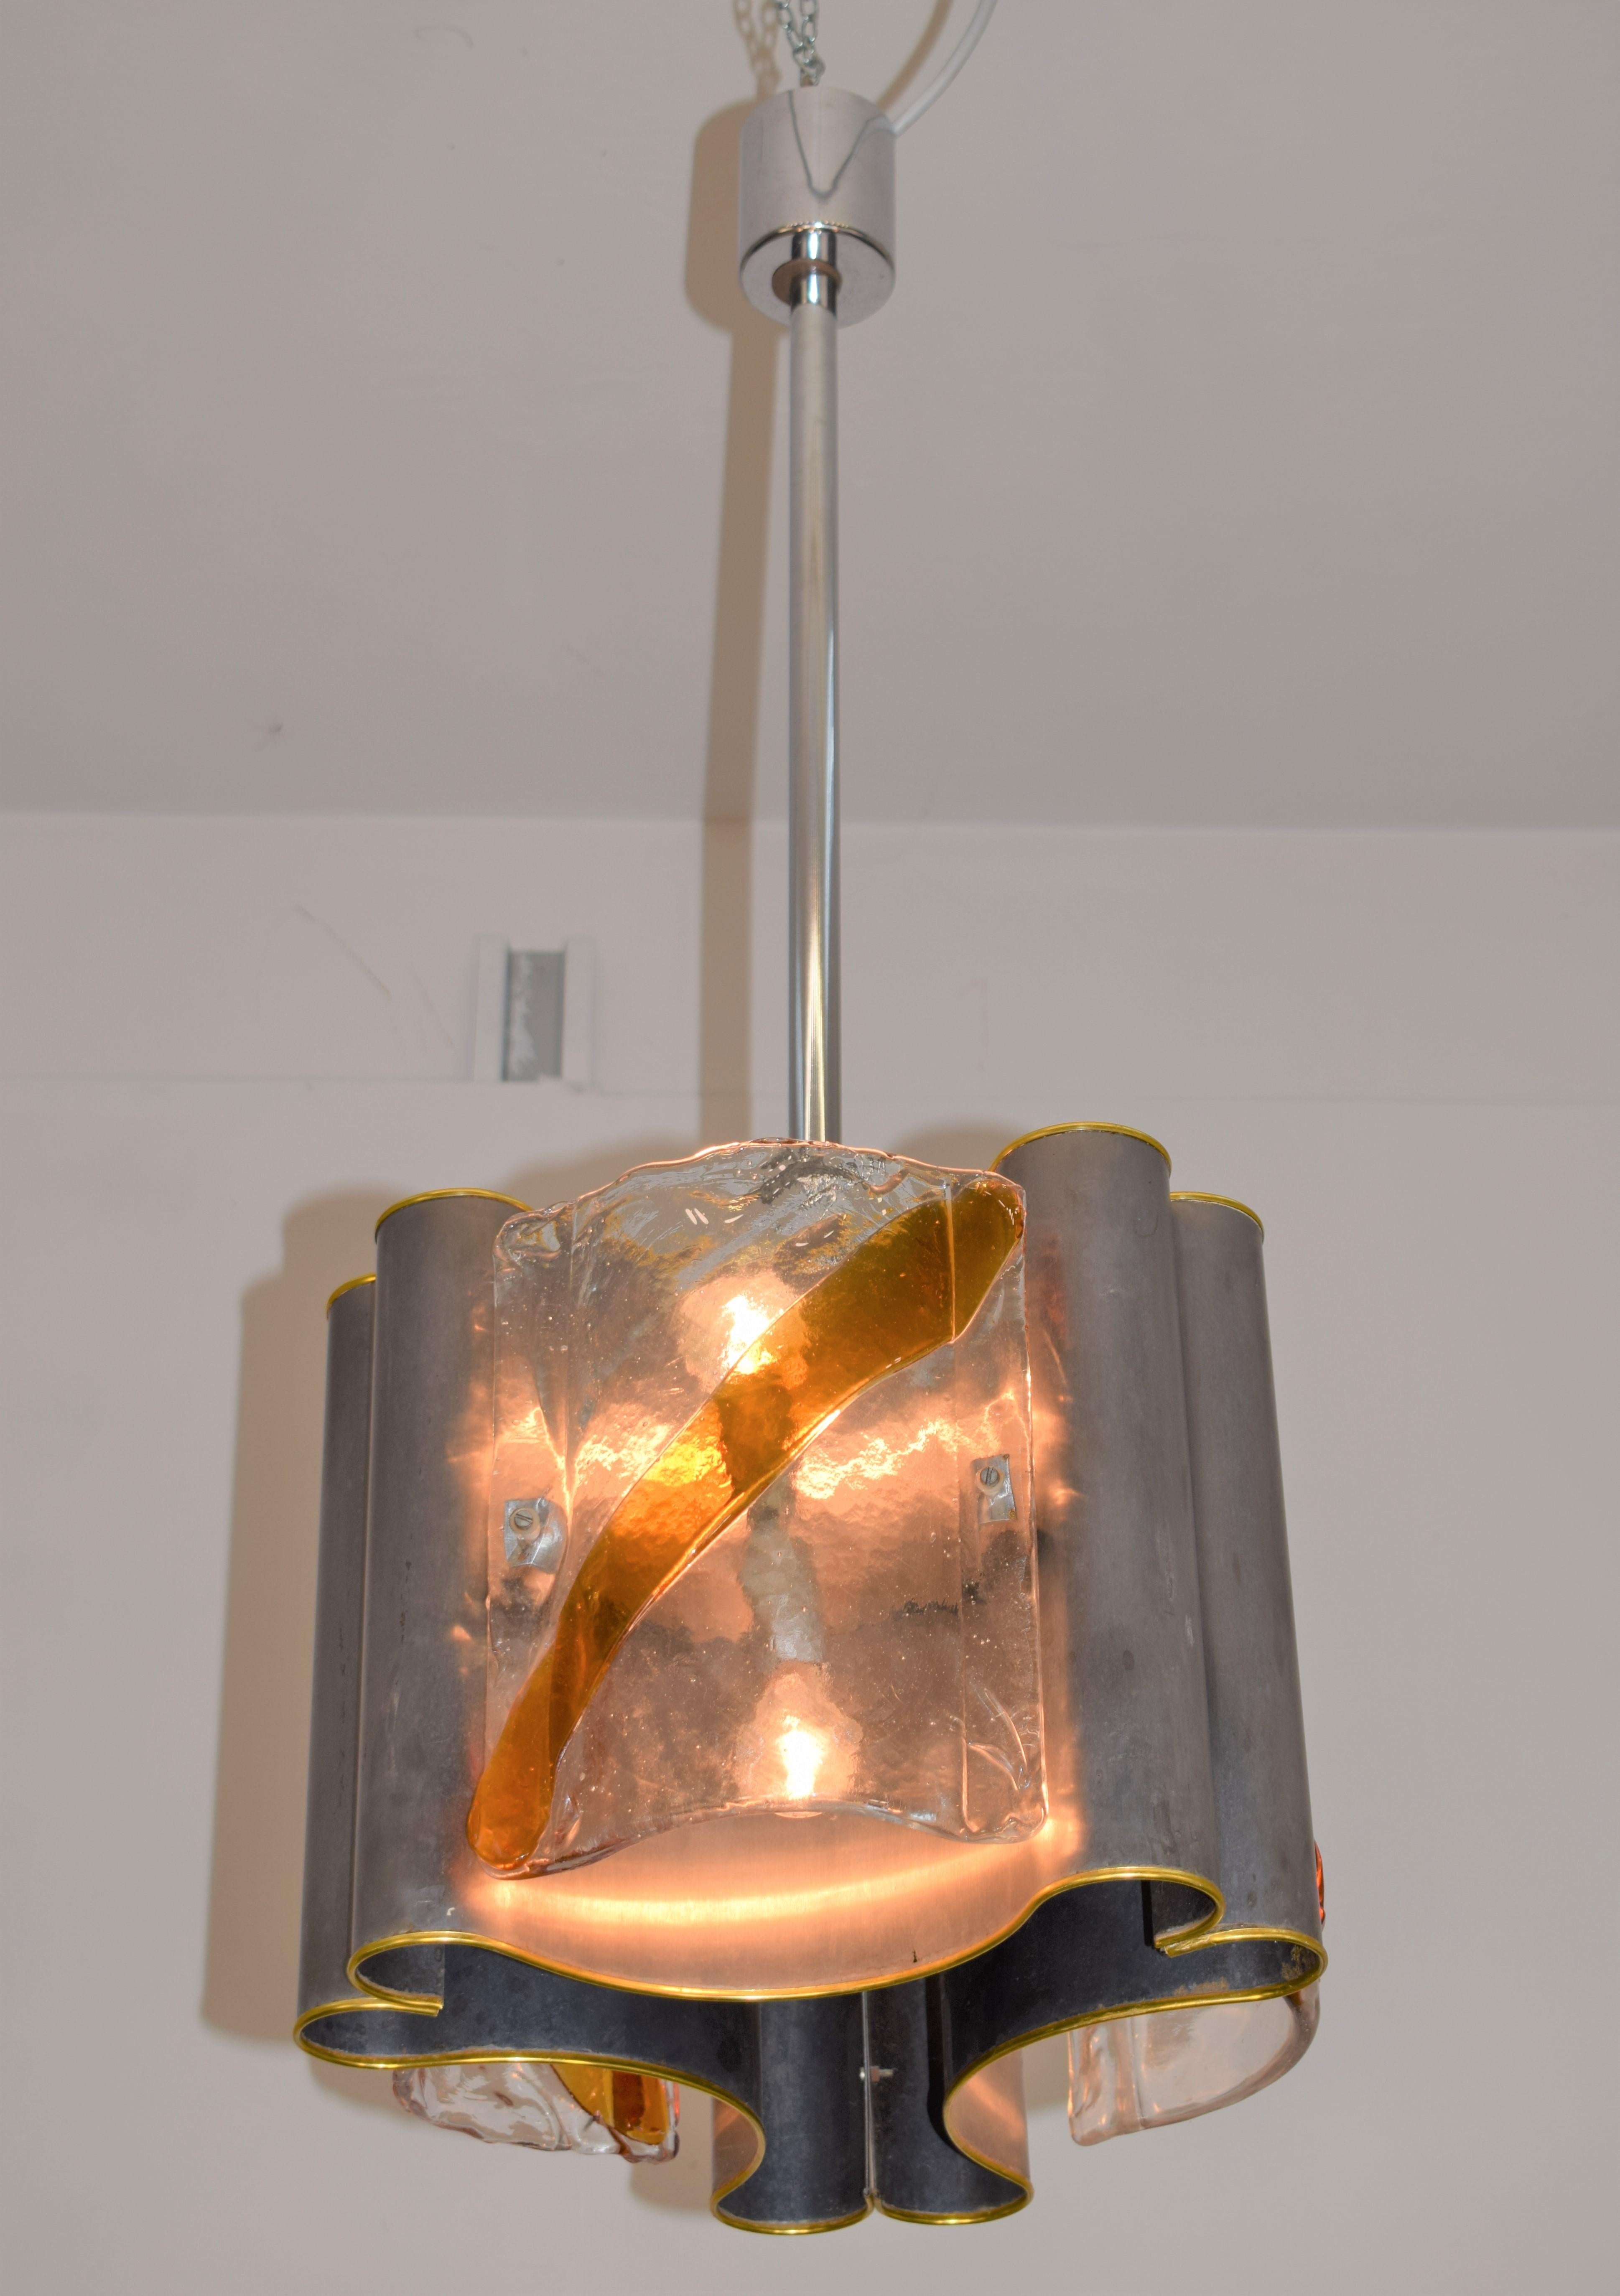 Italian chandelier by Toni Zuccheri for Mazzega, 1970s.

Dimensions: H= 95 cm; D= 38 cm.